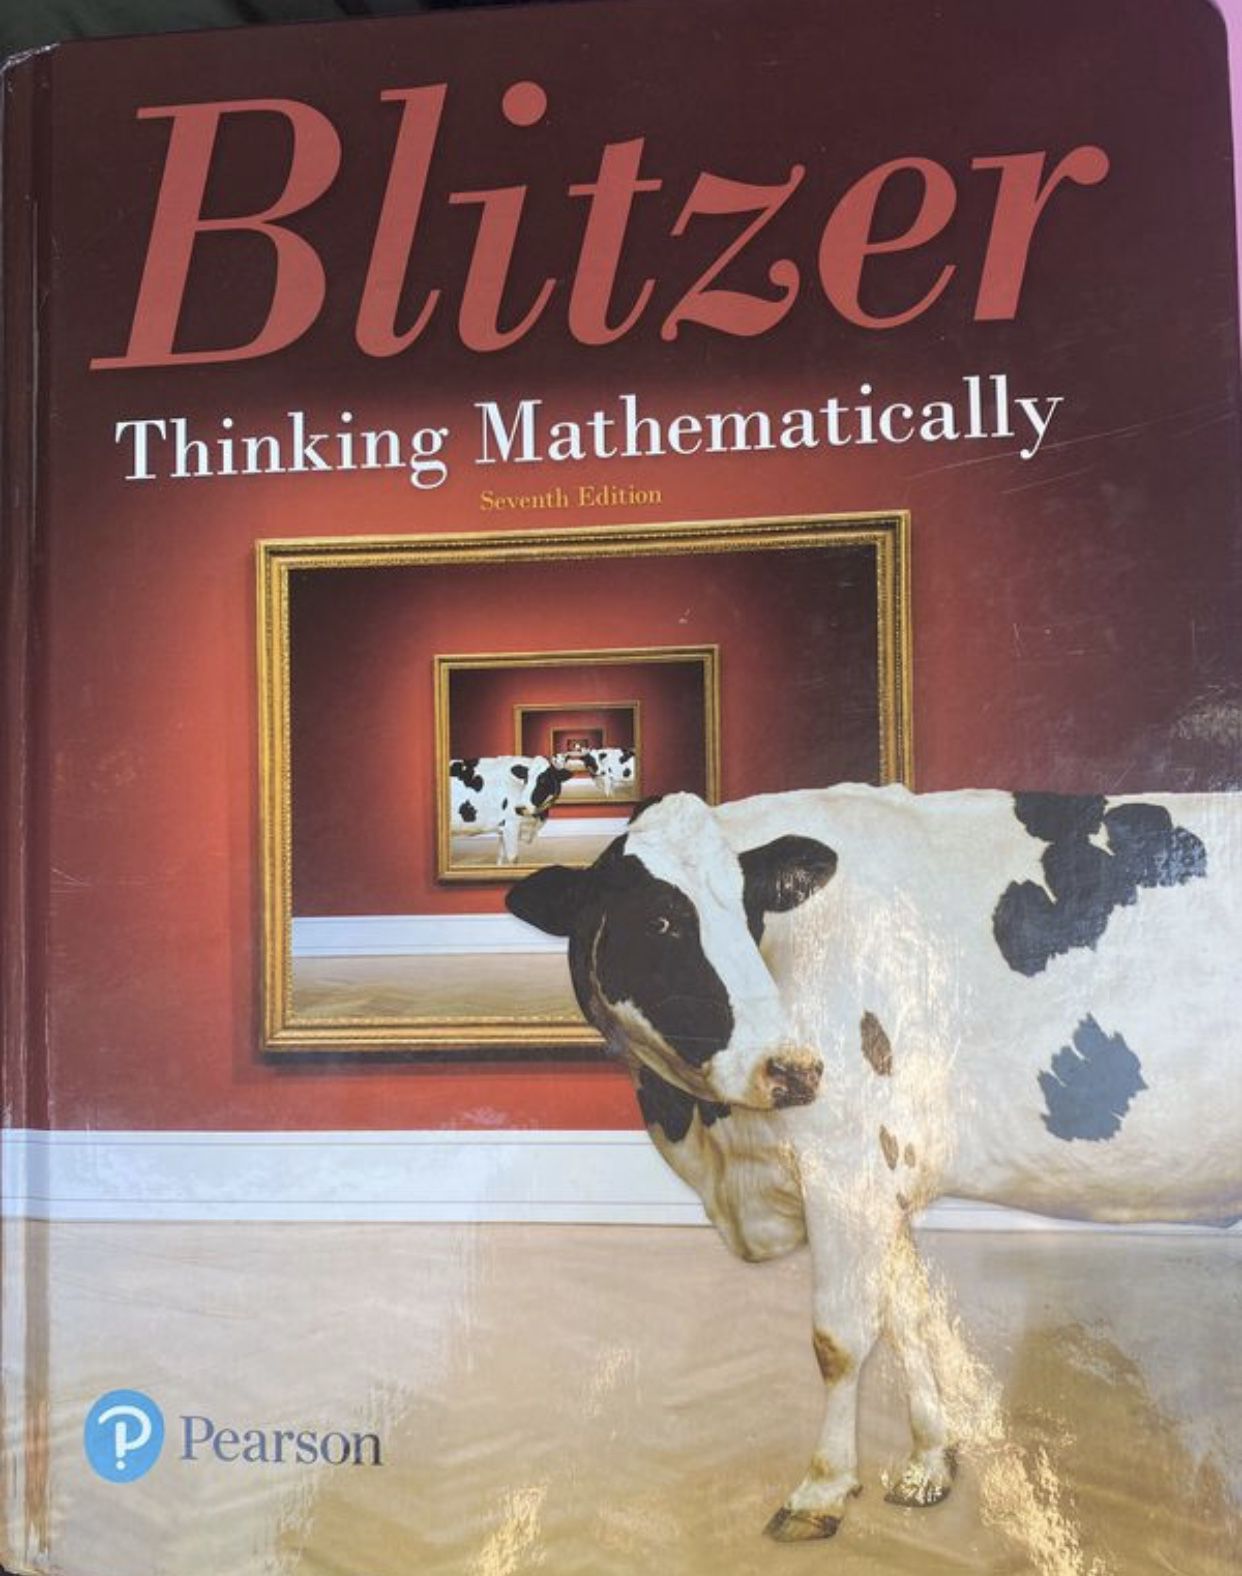 Blitzer thinking mathematically